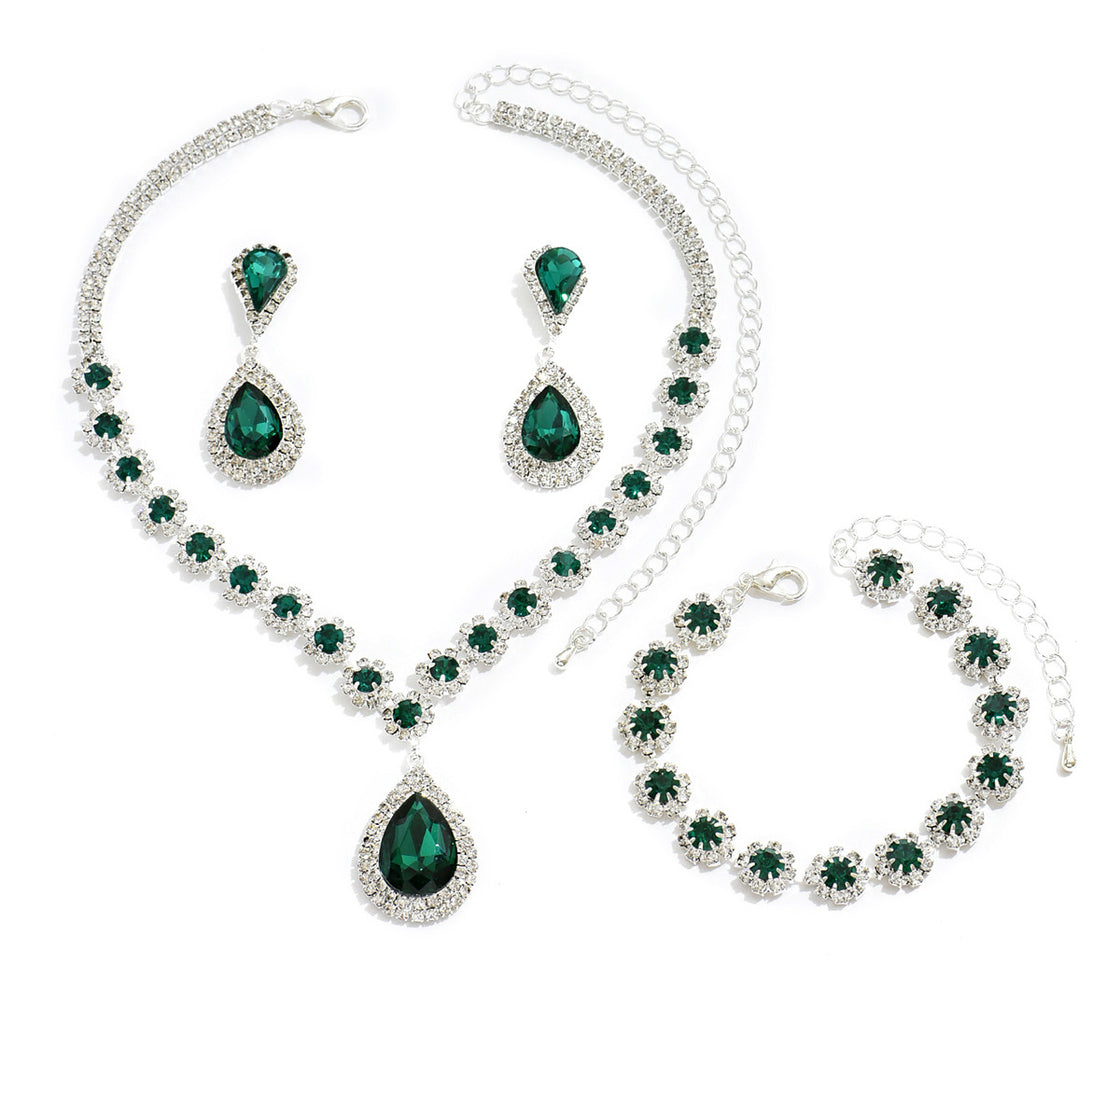 Elegant Ensemble: Bridal Jewelry Set - Necklace, Ear Studs, Bracelet Trio